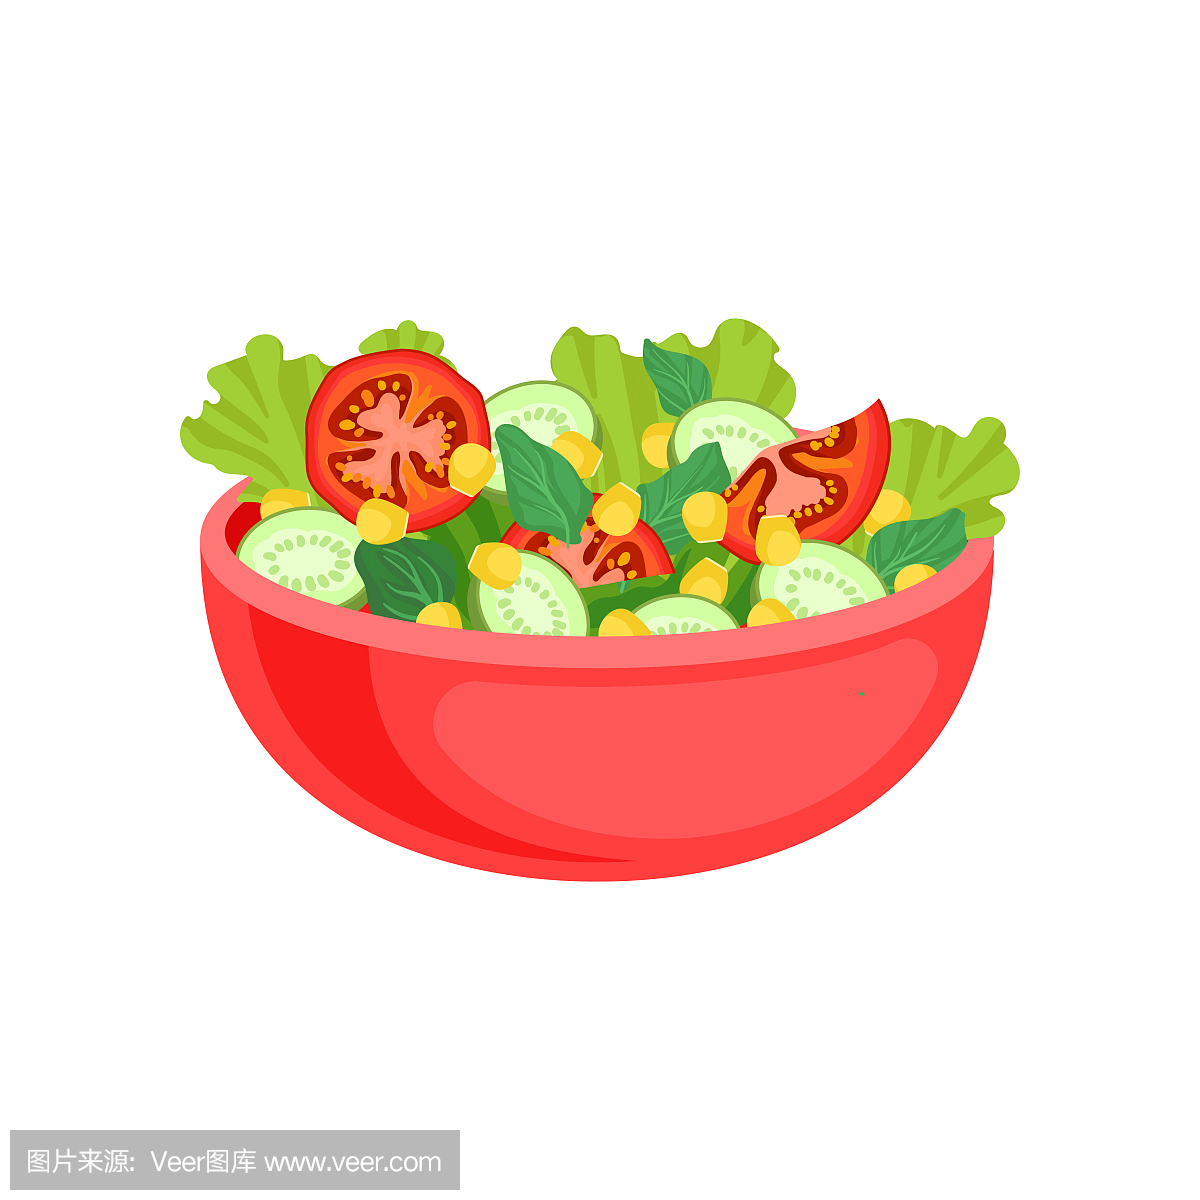 Fresh vegetable salad in red ceramic bowl. Dis